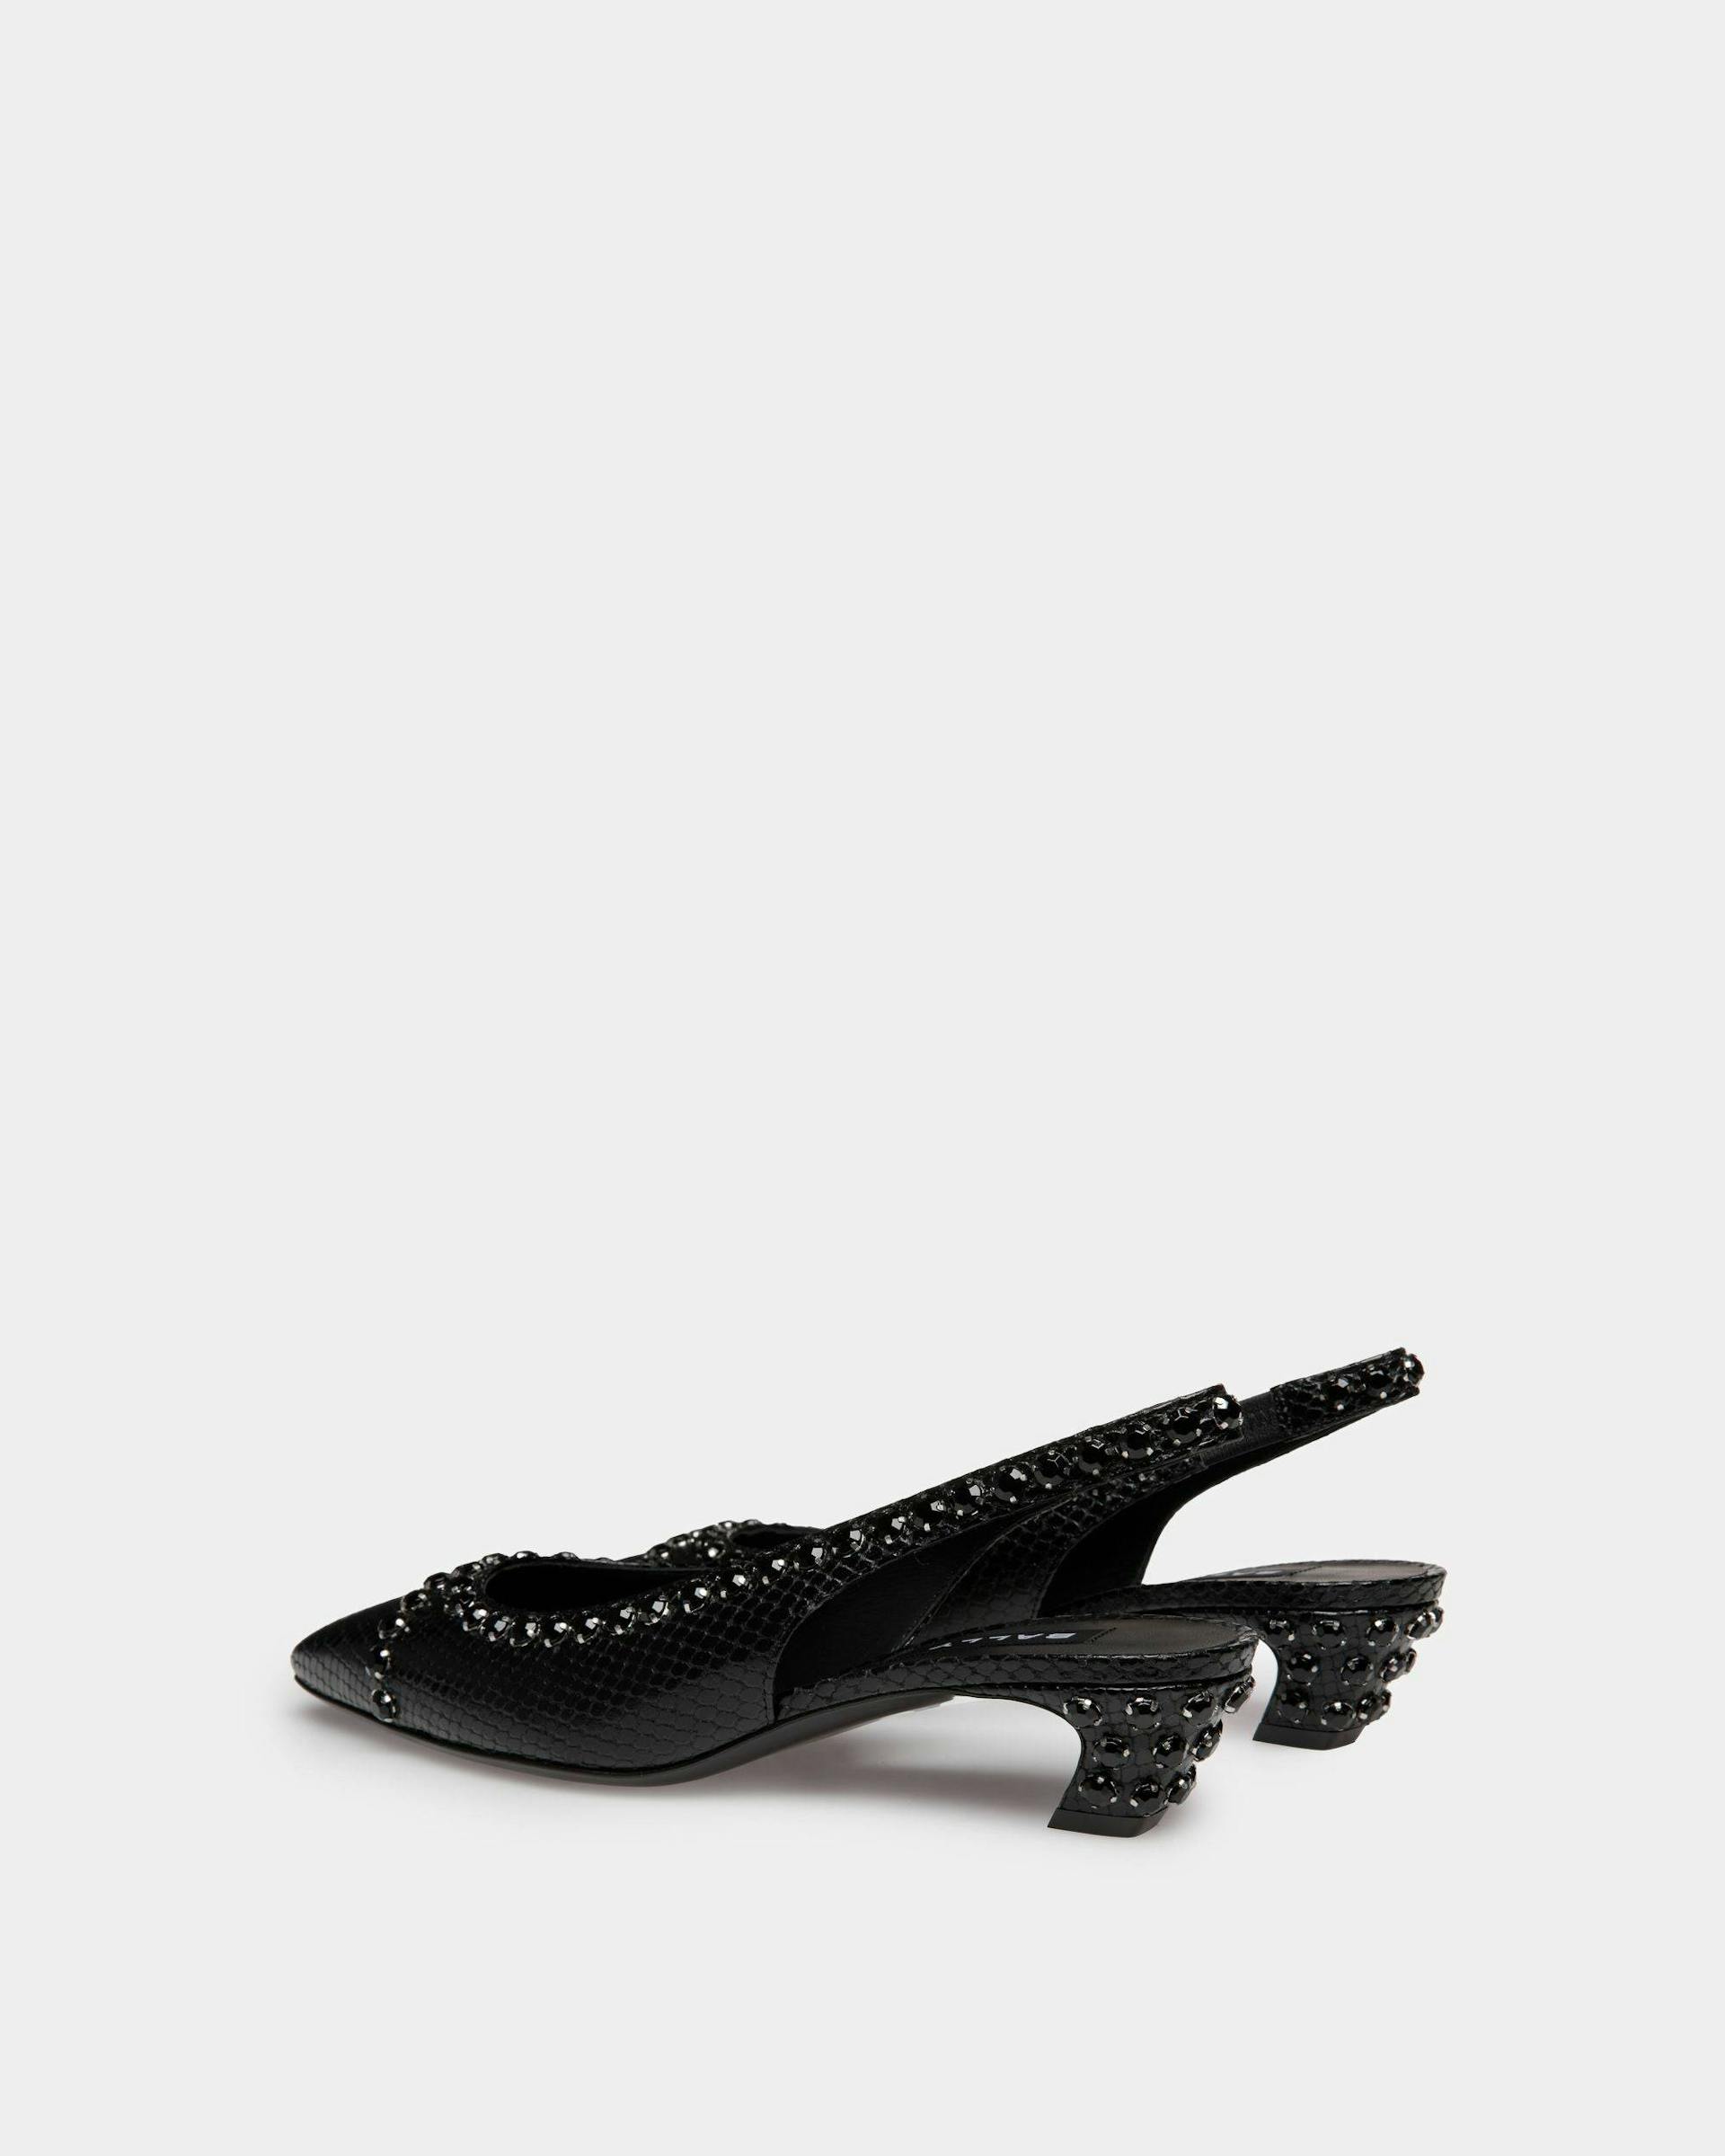 Women's Sylt Slingback Pump in Black Python Printed Leather | Bally | Still Life 3/4 Back